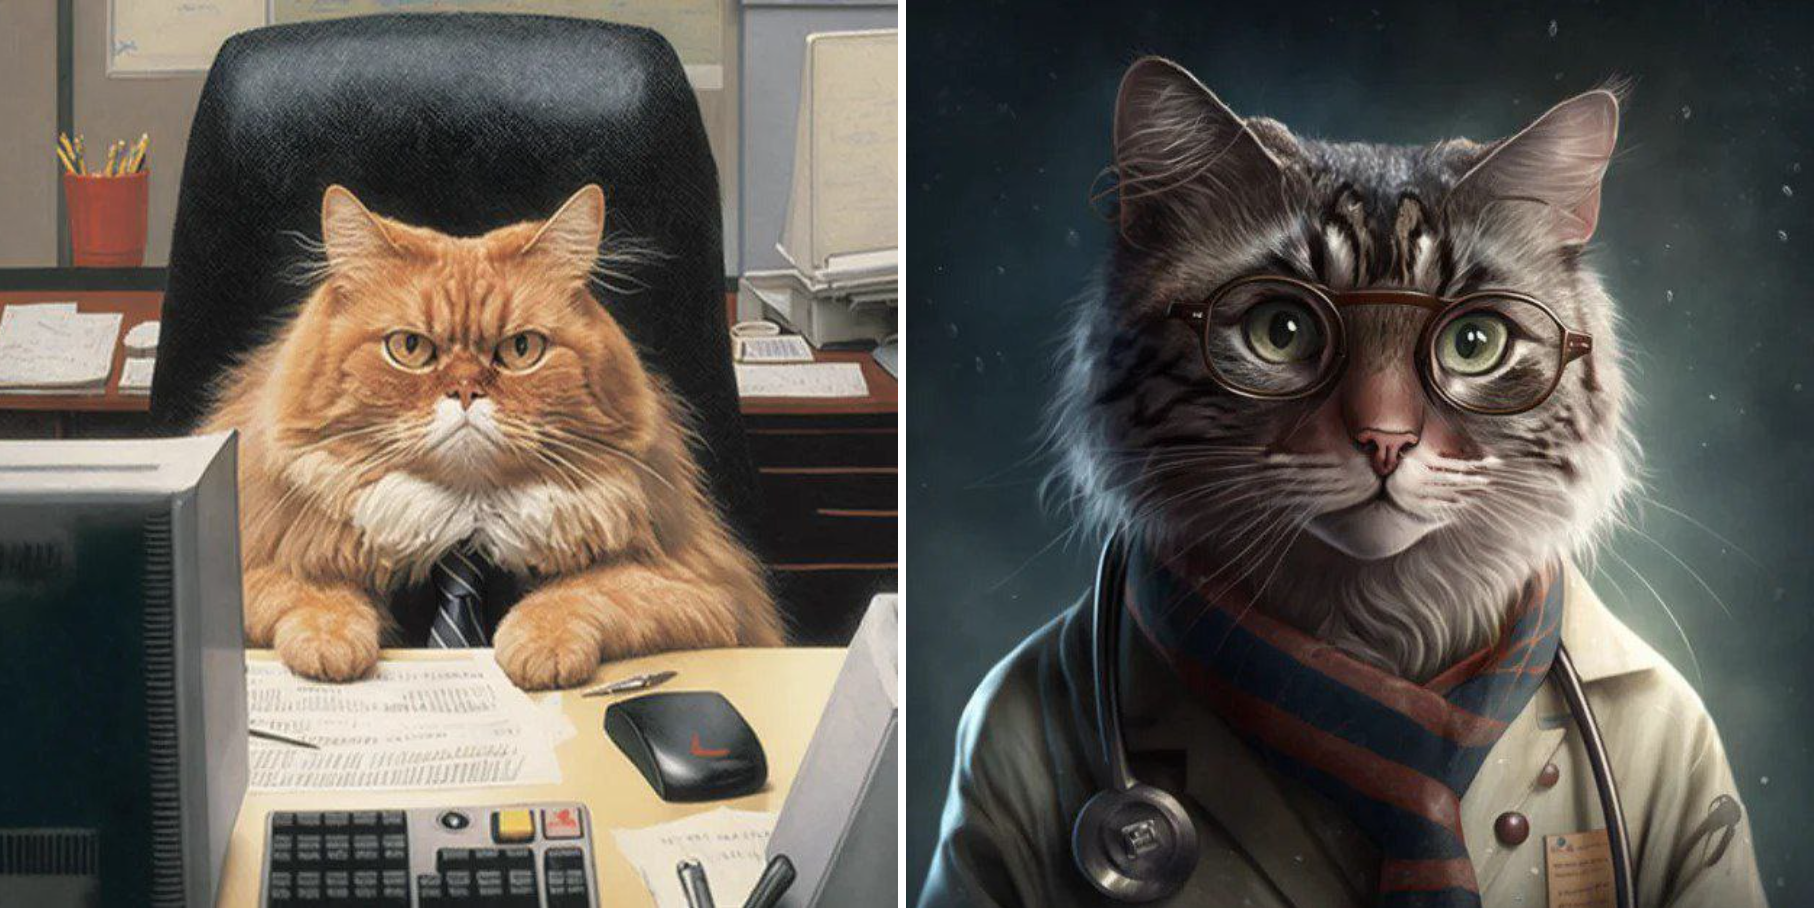 Вот так нейросеть видит кота – банковского сотрудника и кота-врача. Фото © T.me / Нейросеть видит